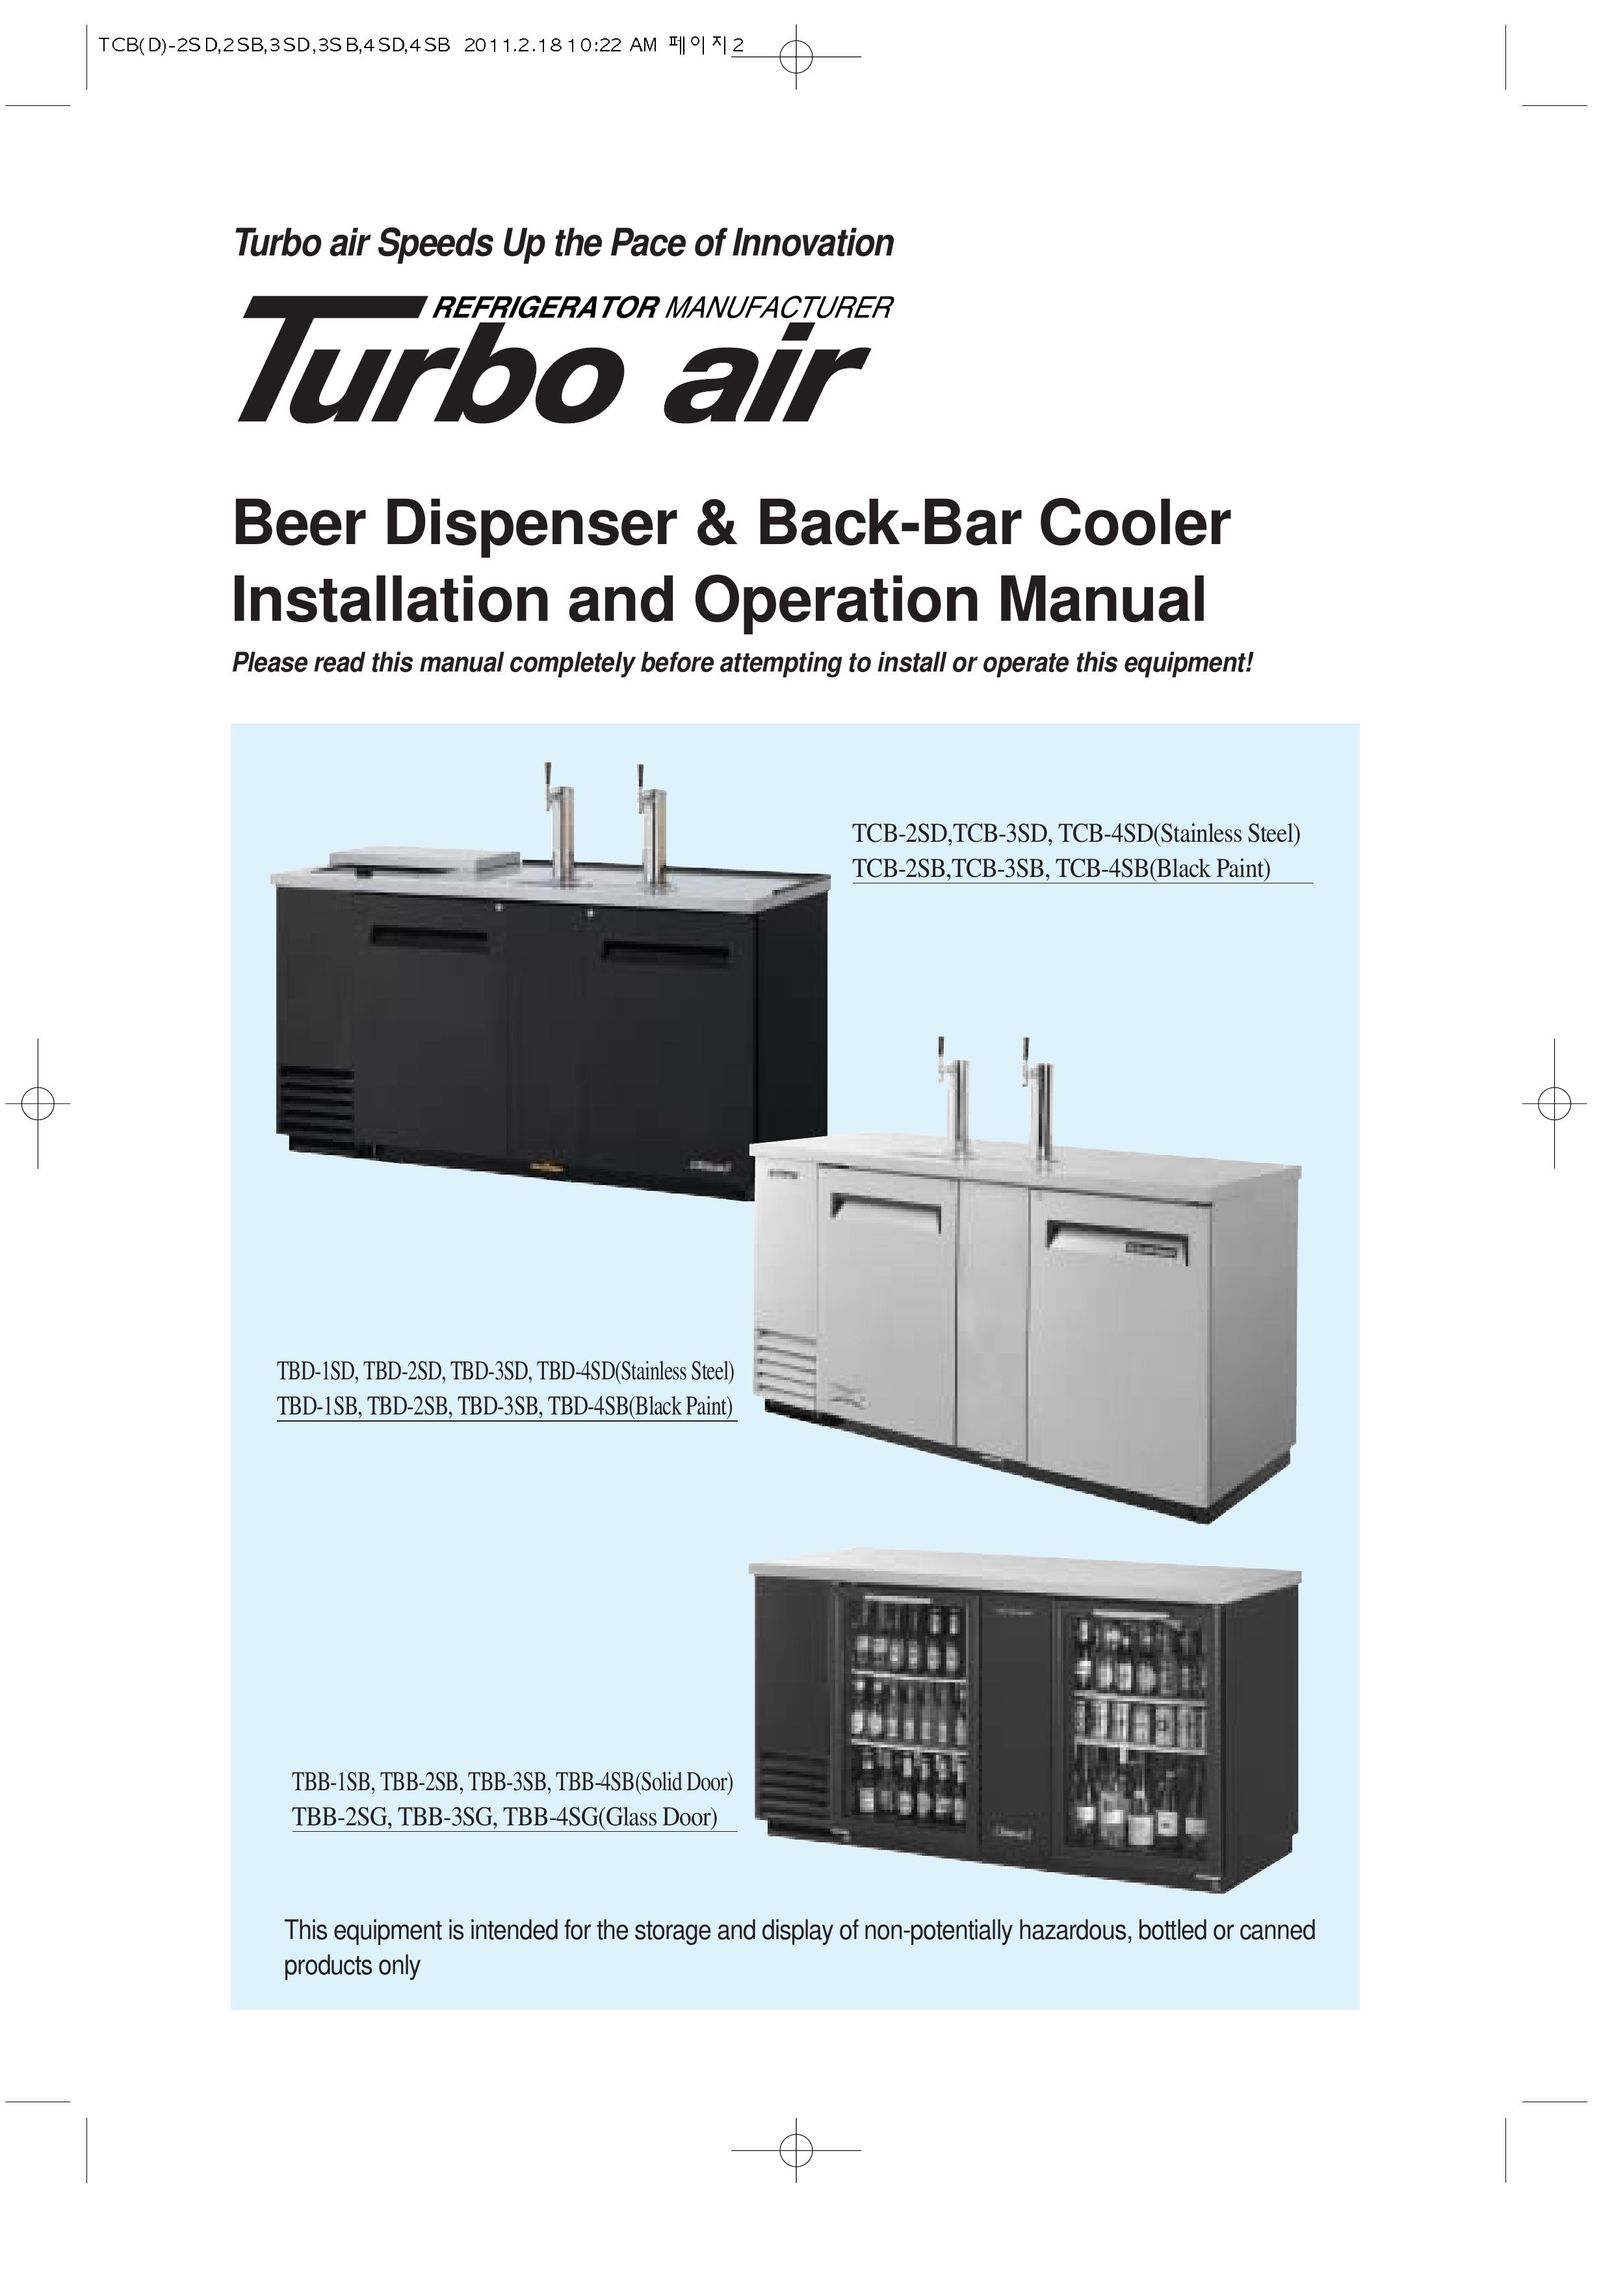 Turbo Air TBB-1SB Beverage Dispenser User Manual